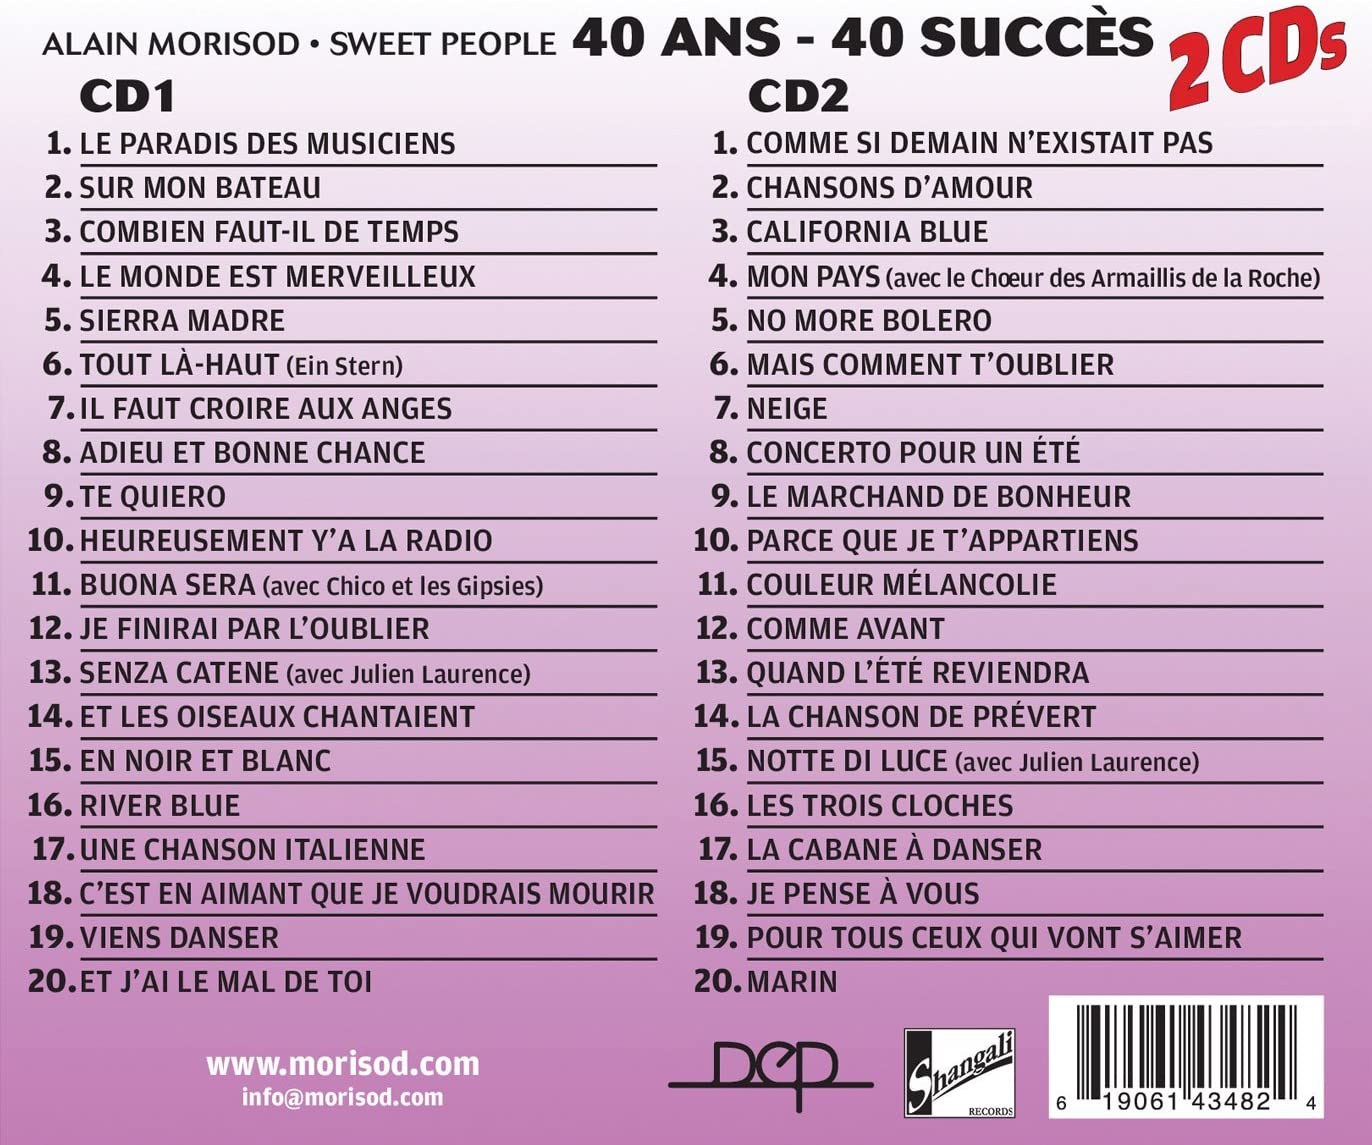 40 Ans - 40 Succes (2Cd) [Audio CD] Alain Morisod & Sweet People